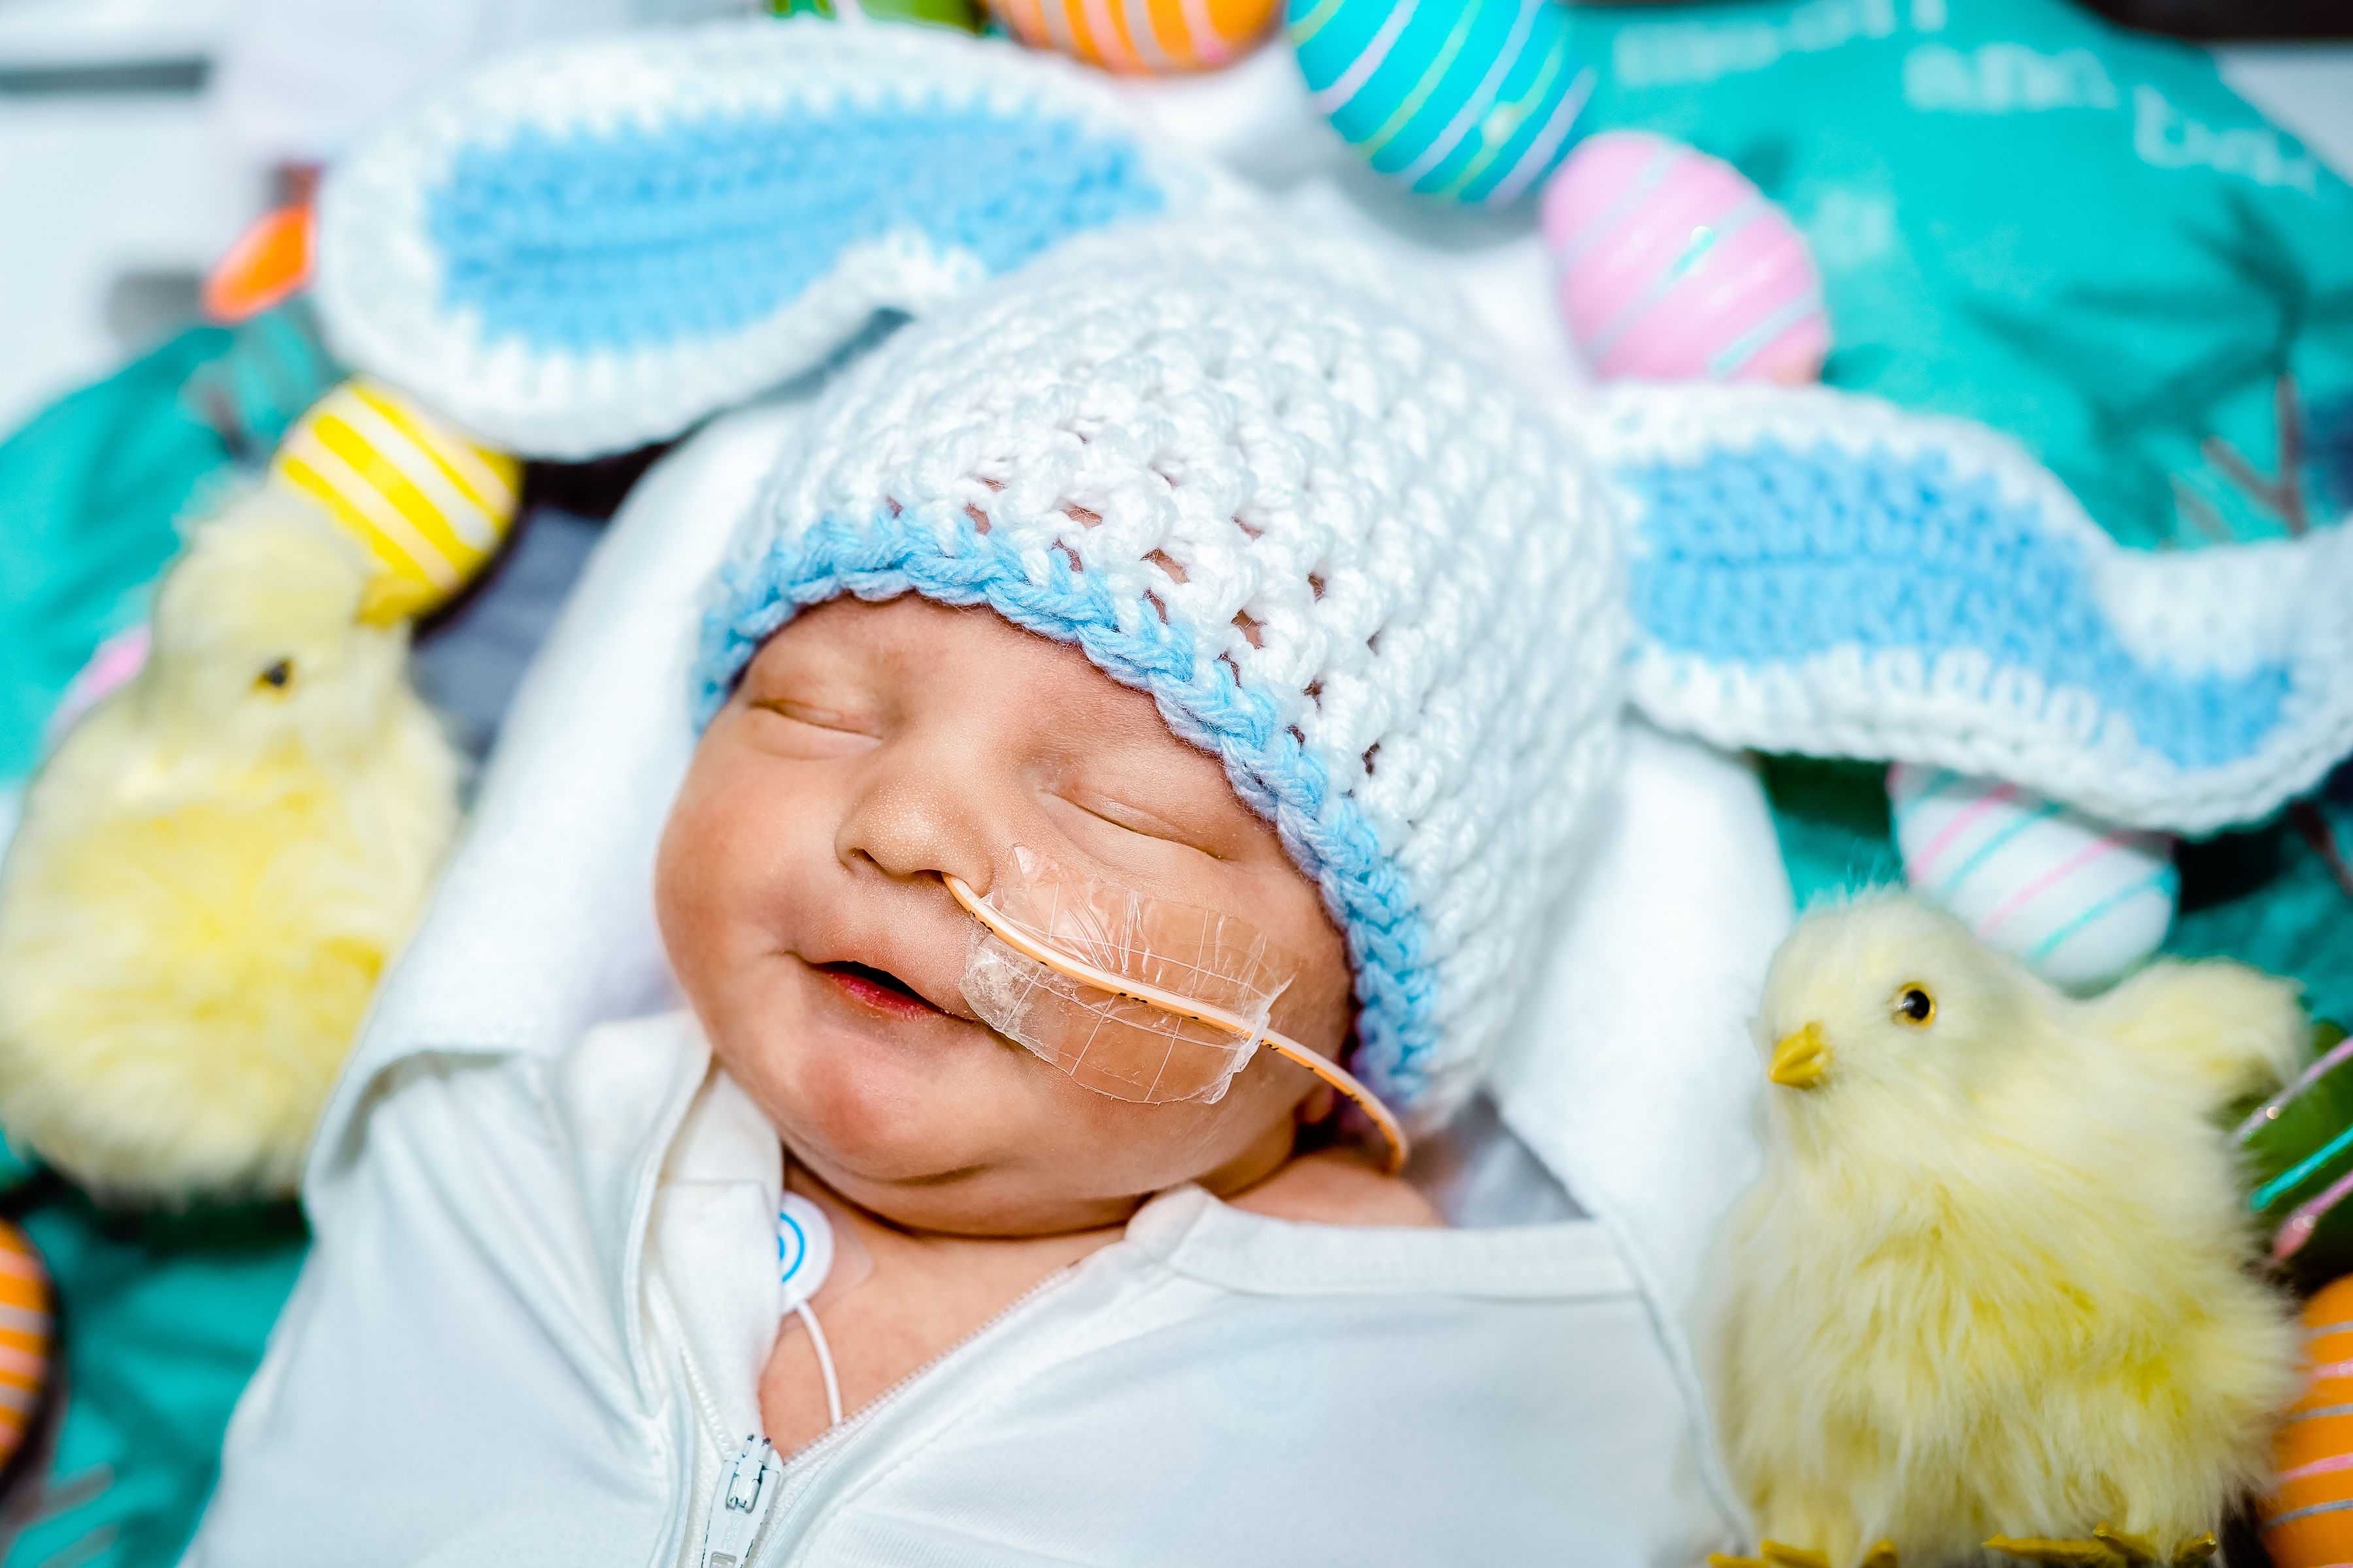 LOOK: Baptist Health newborns dressed as cute little bunnies for spring  themed photo shoot